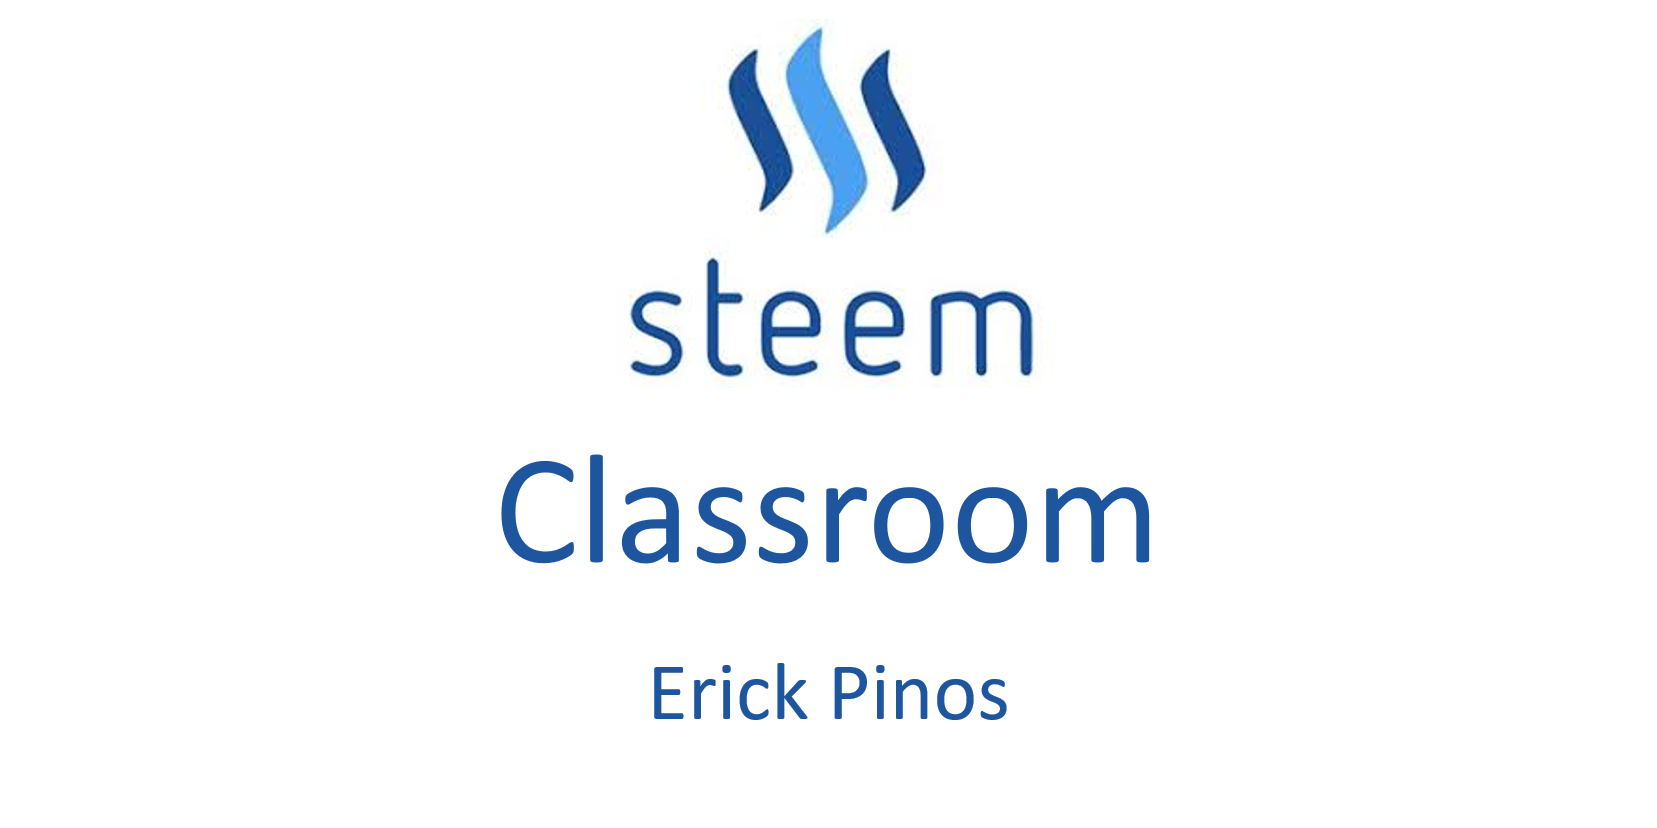 steem-classroom-erick-wide.png